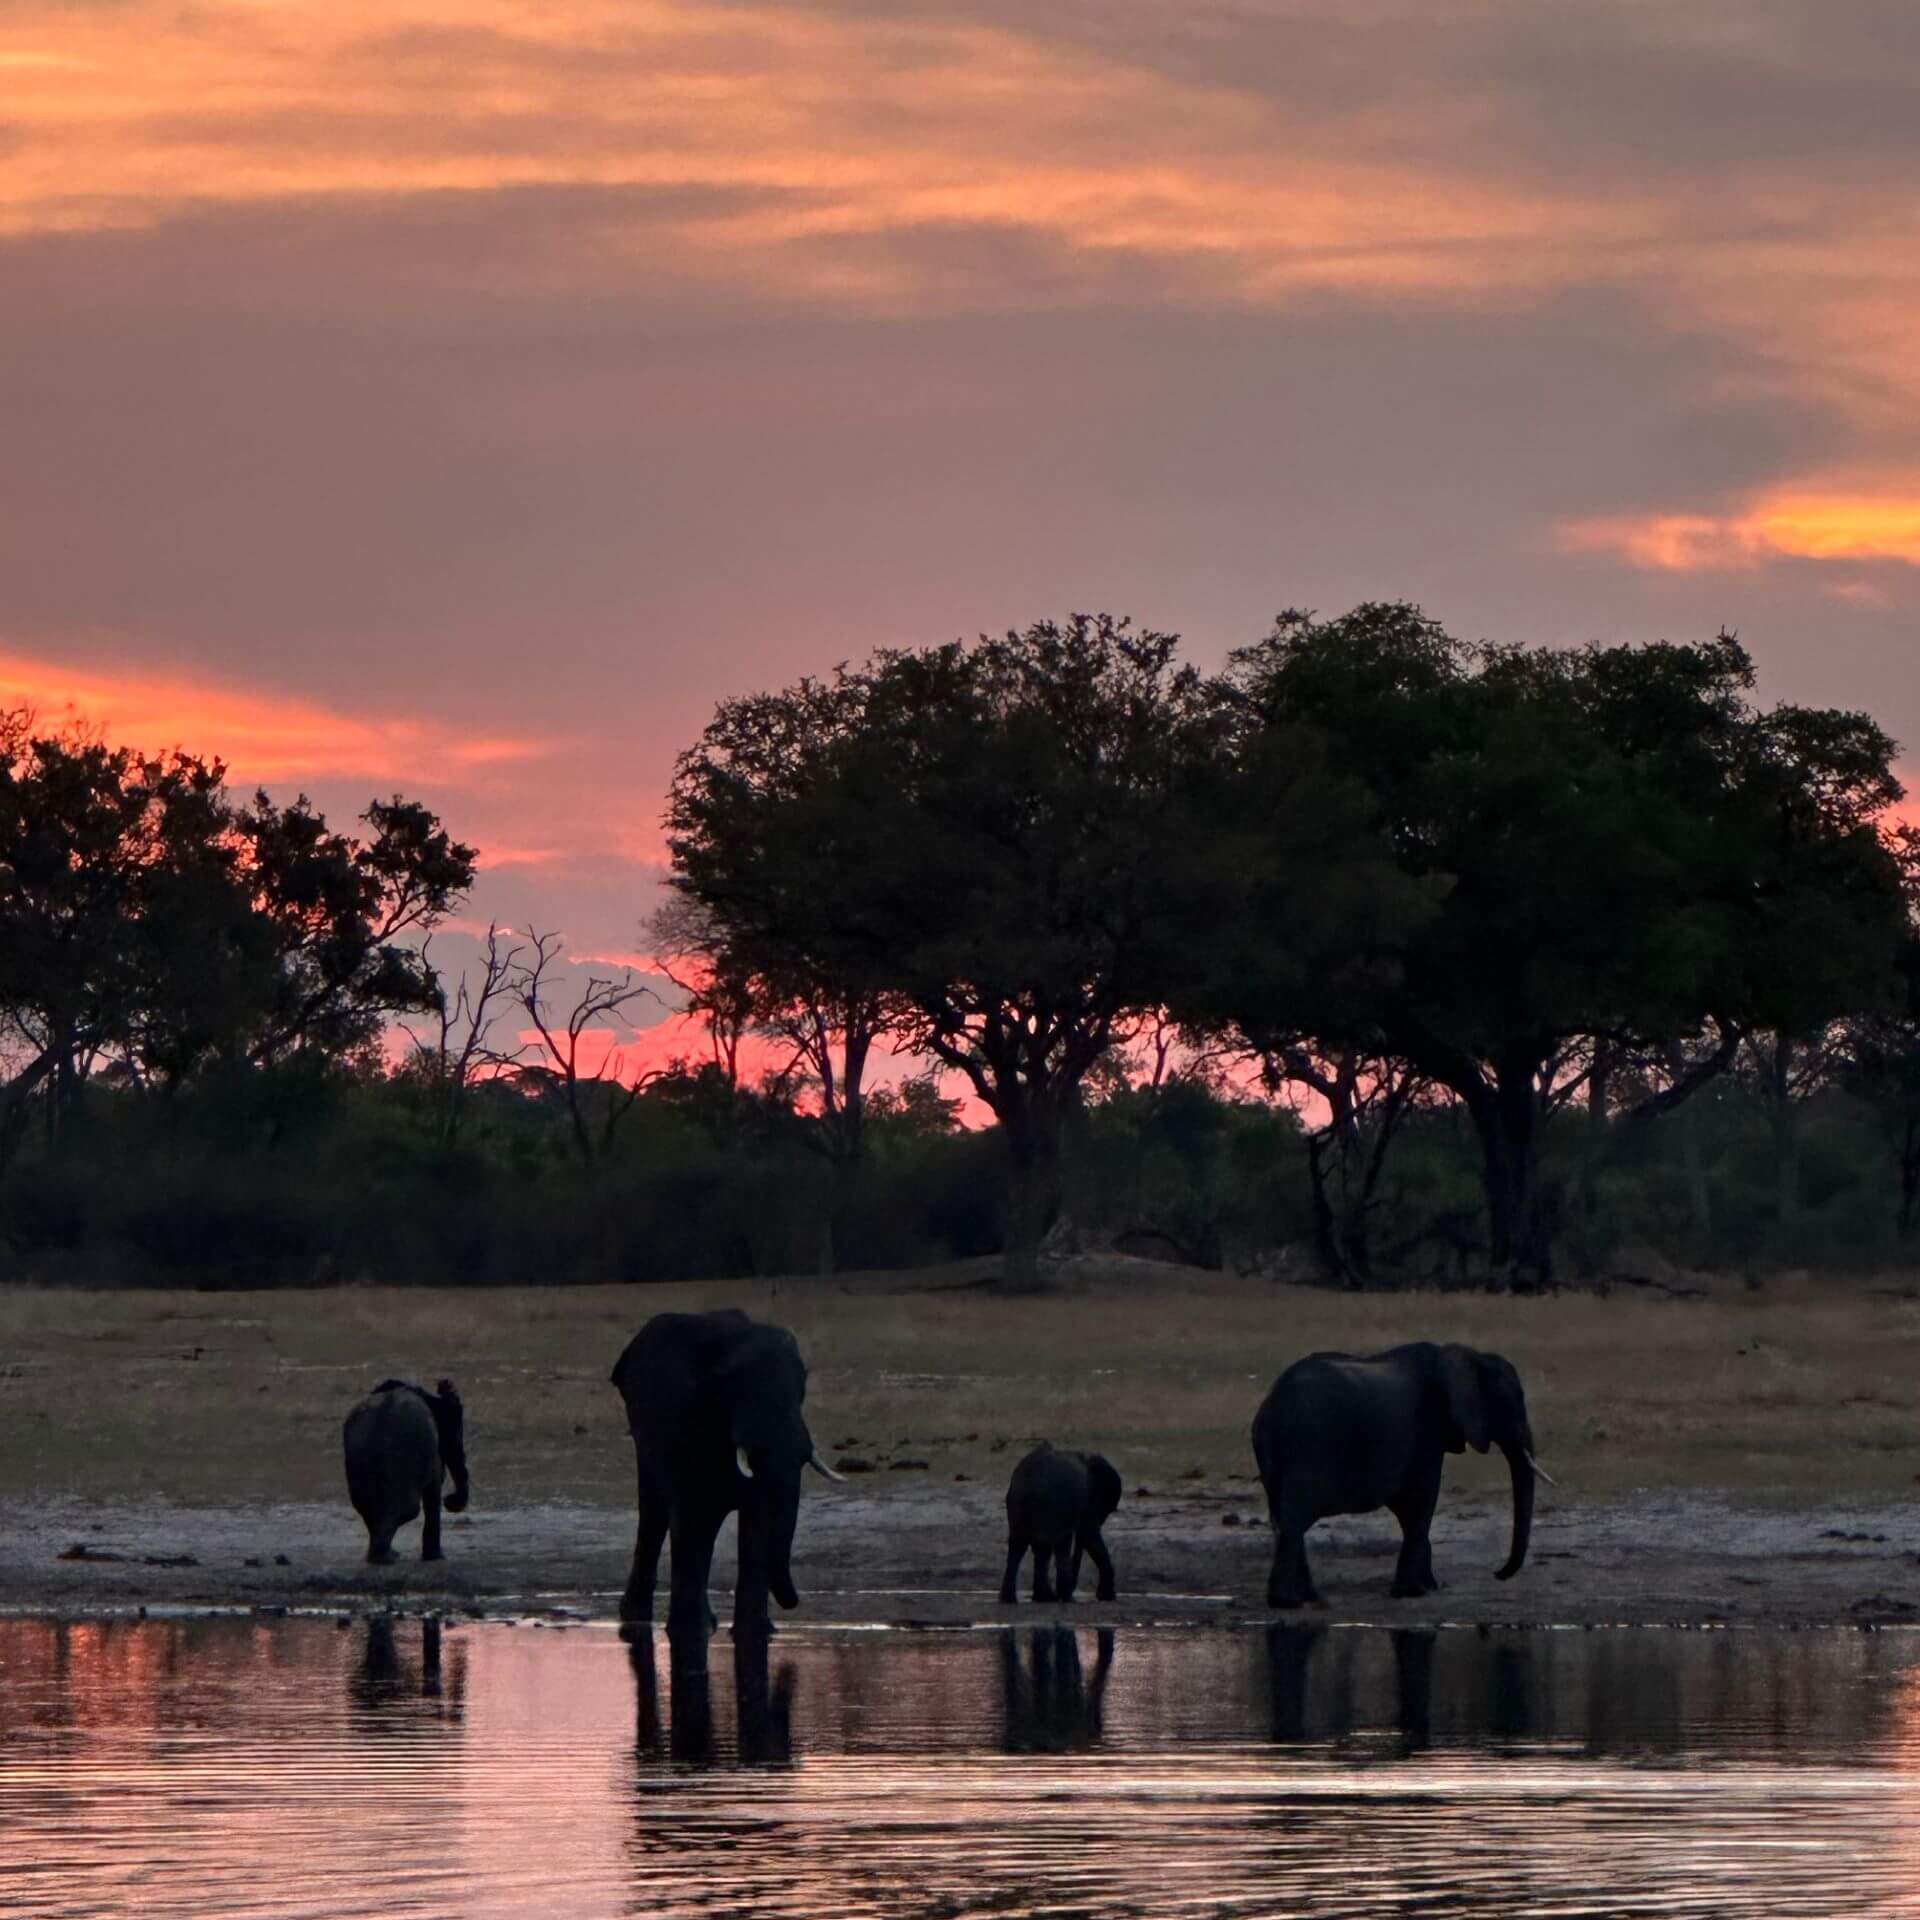 Choosing Safaris: Private Conservancies or National Parks?